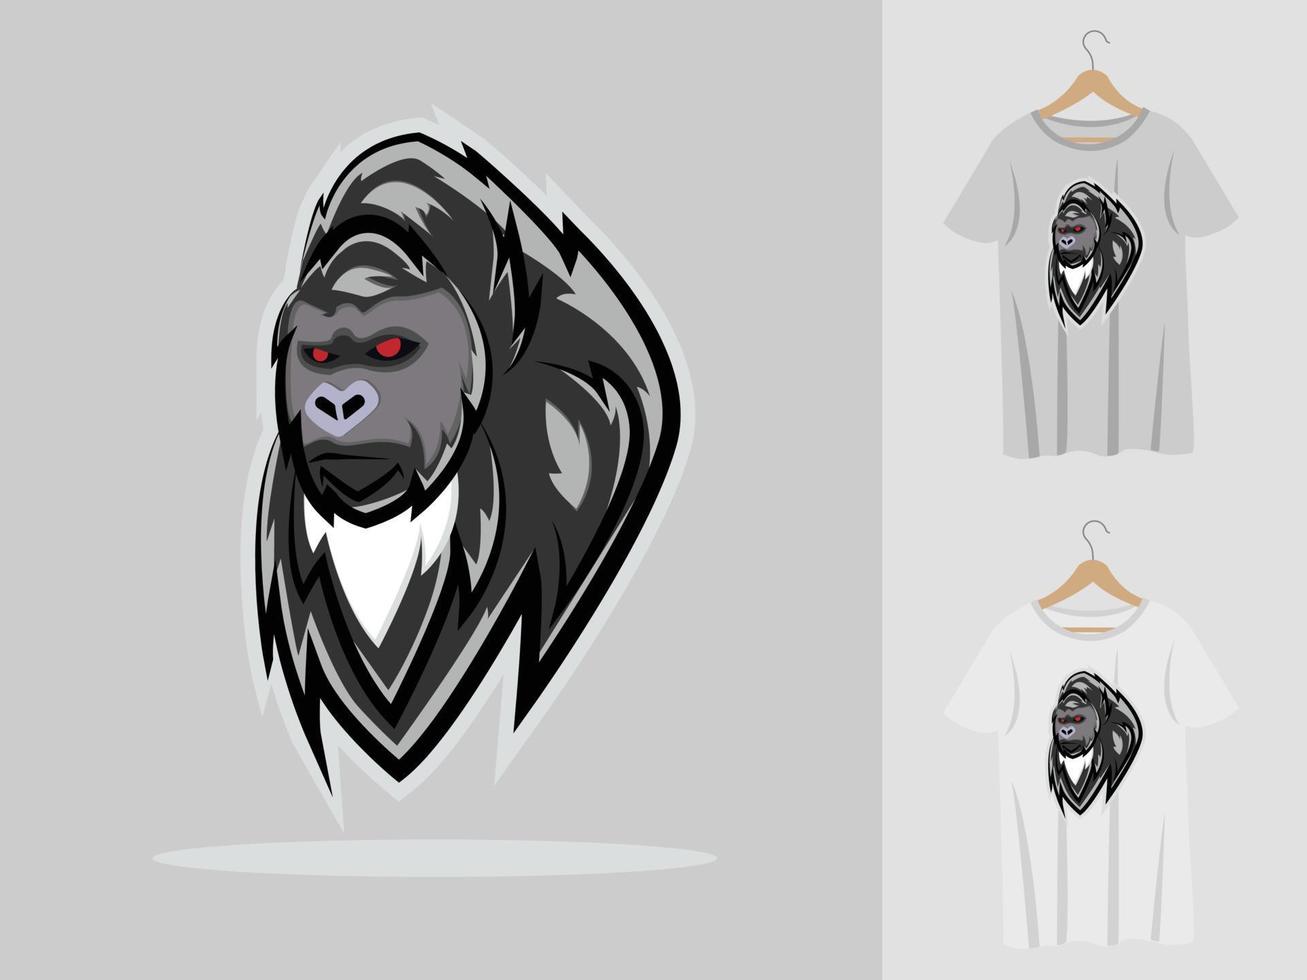 diseño de mascota con logo de gorila con camiseta. ilustración de cabeza de gorila para equipo deportivo y camiseta de impresión vector